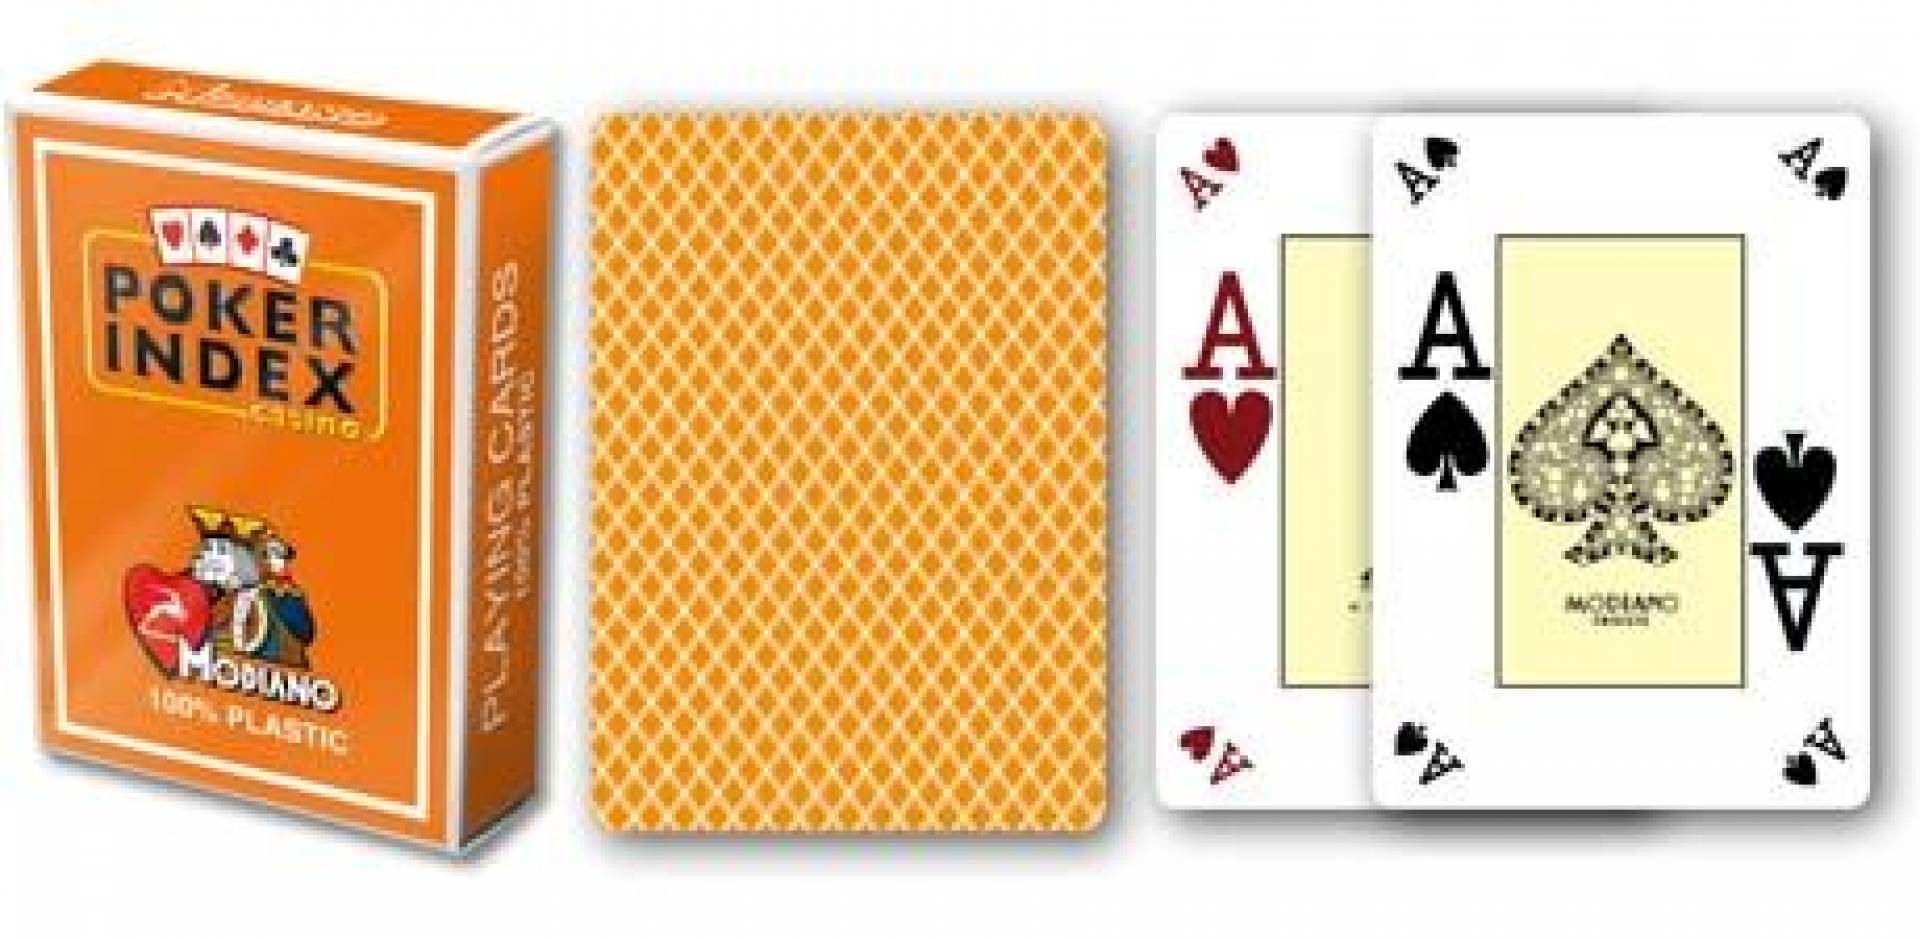 Poker index Casino Modiano Original